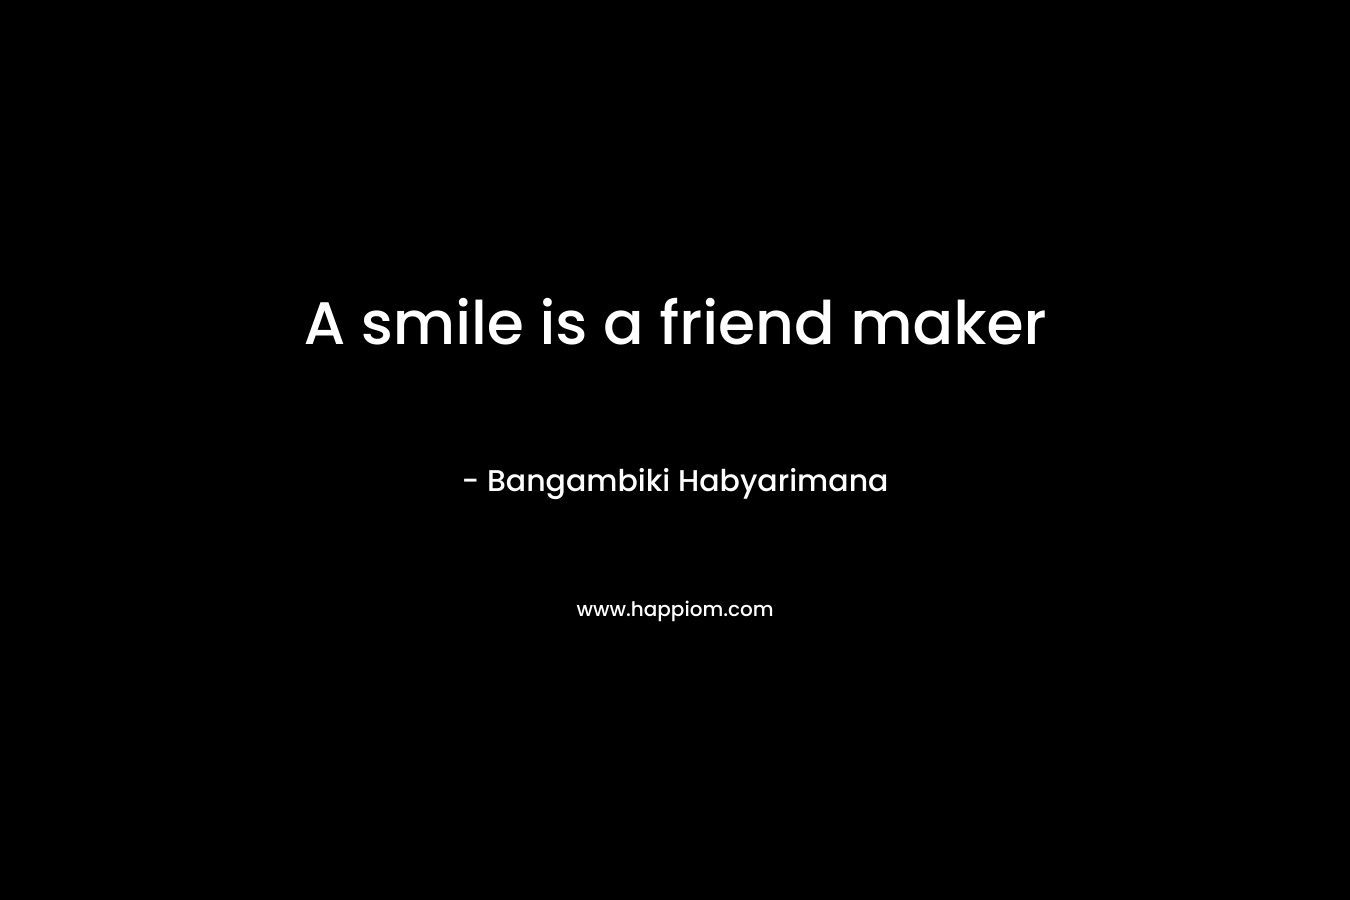 A smile is a friend maker